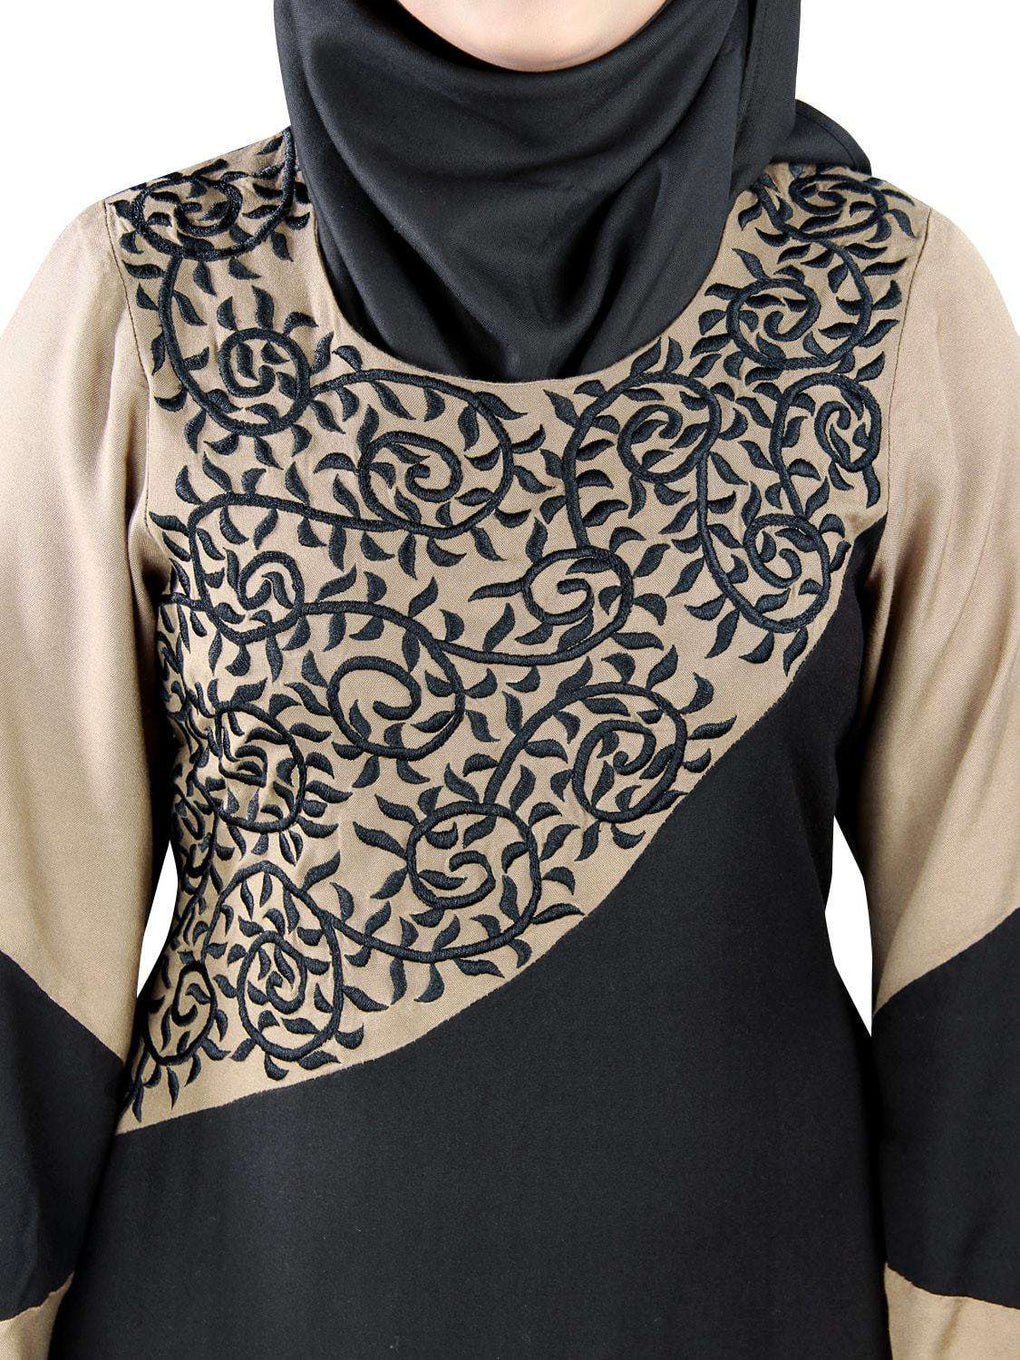 Hirah Rayon Abaya Embroidery